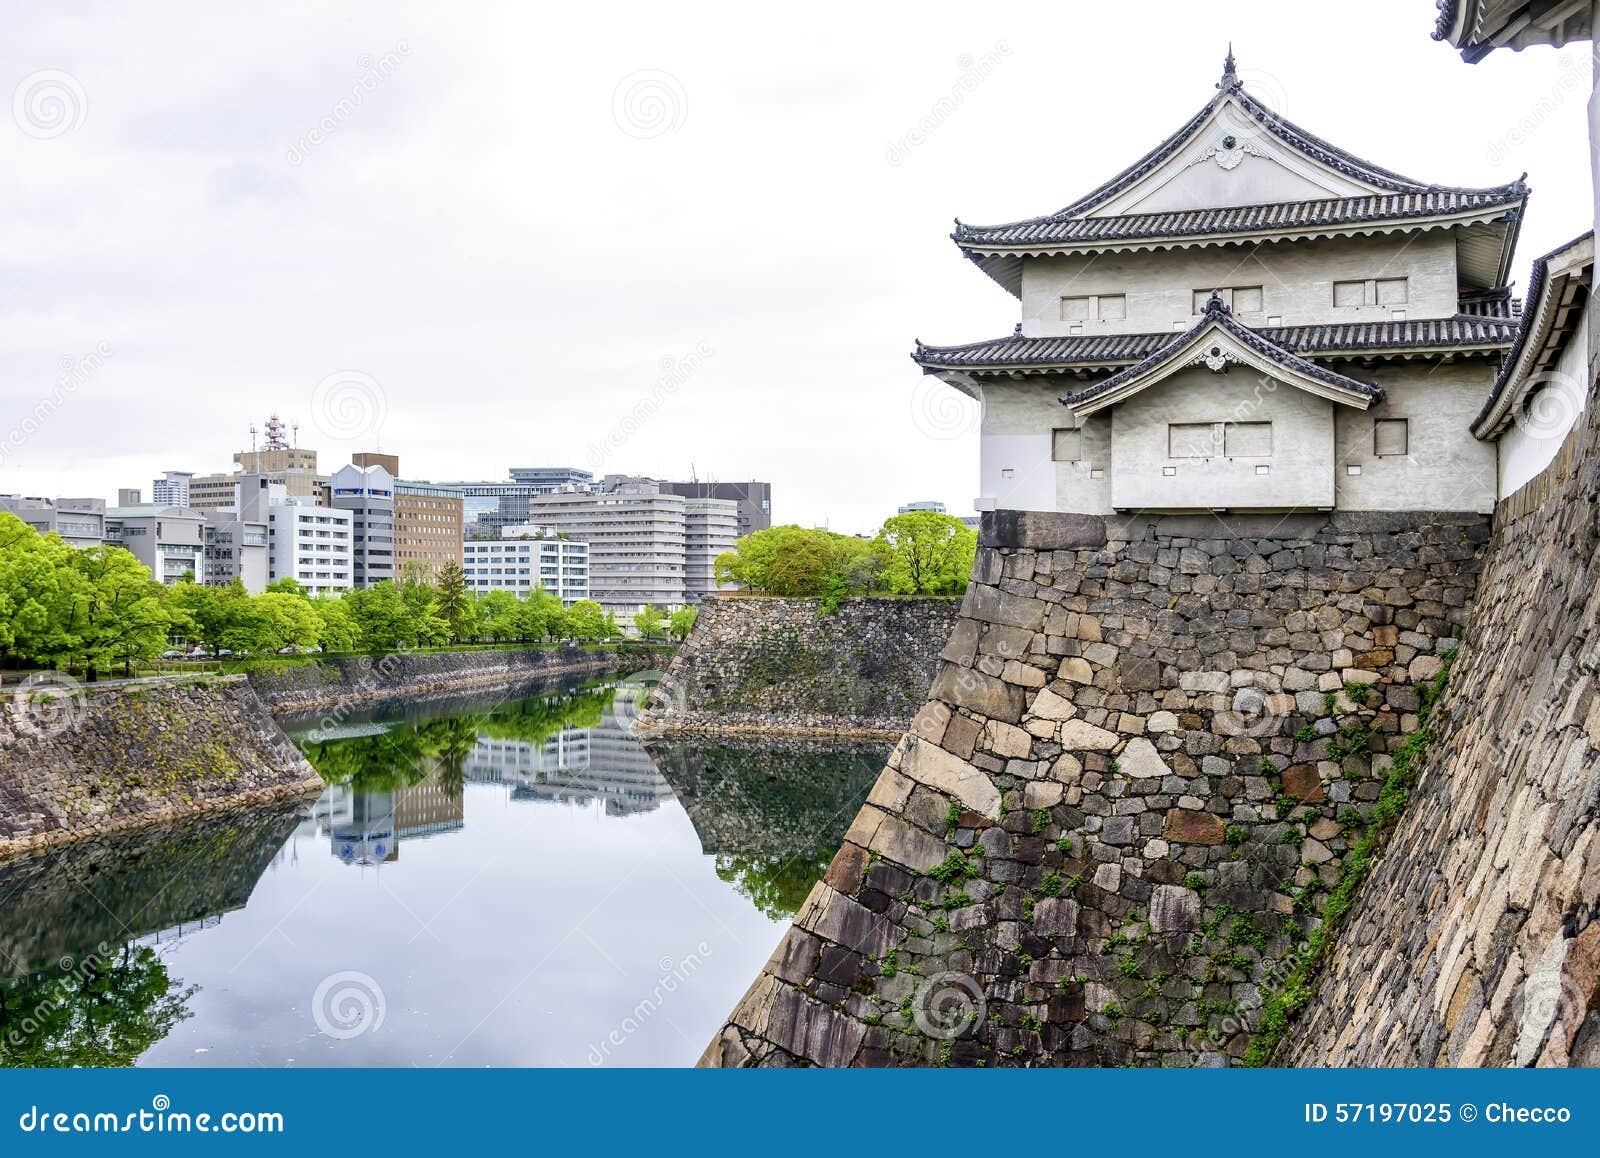 the impressive stone wall of osaka castle, japan